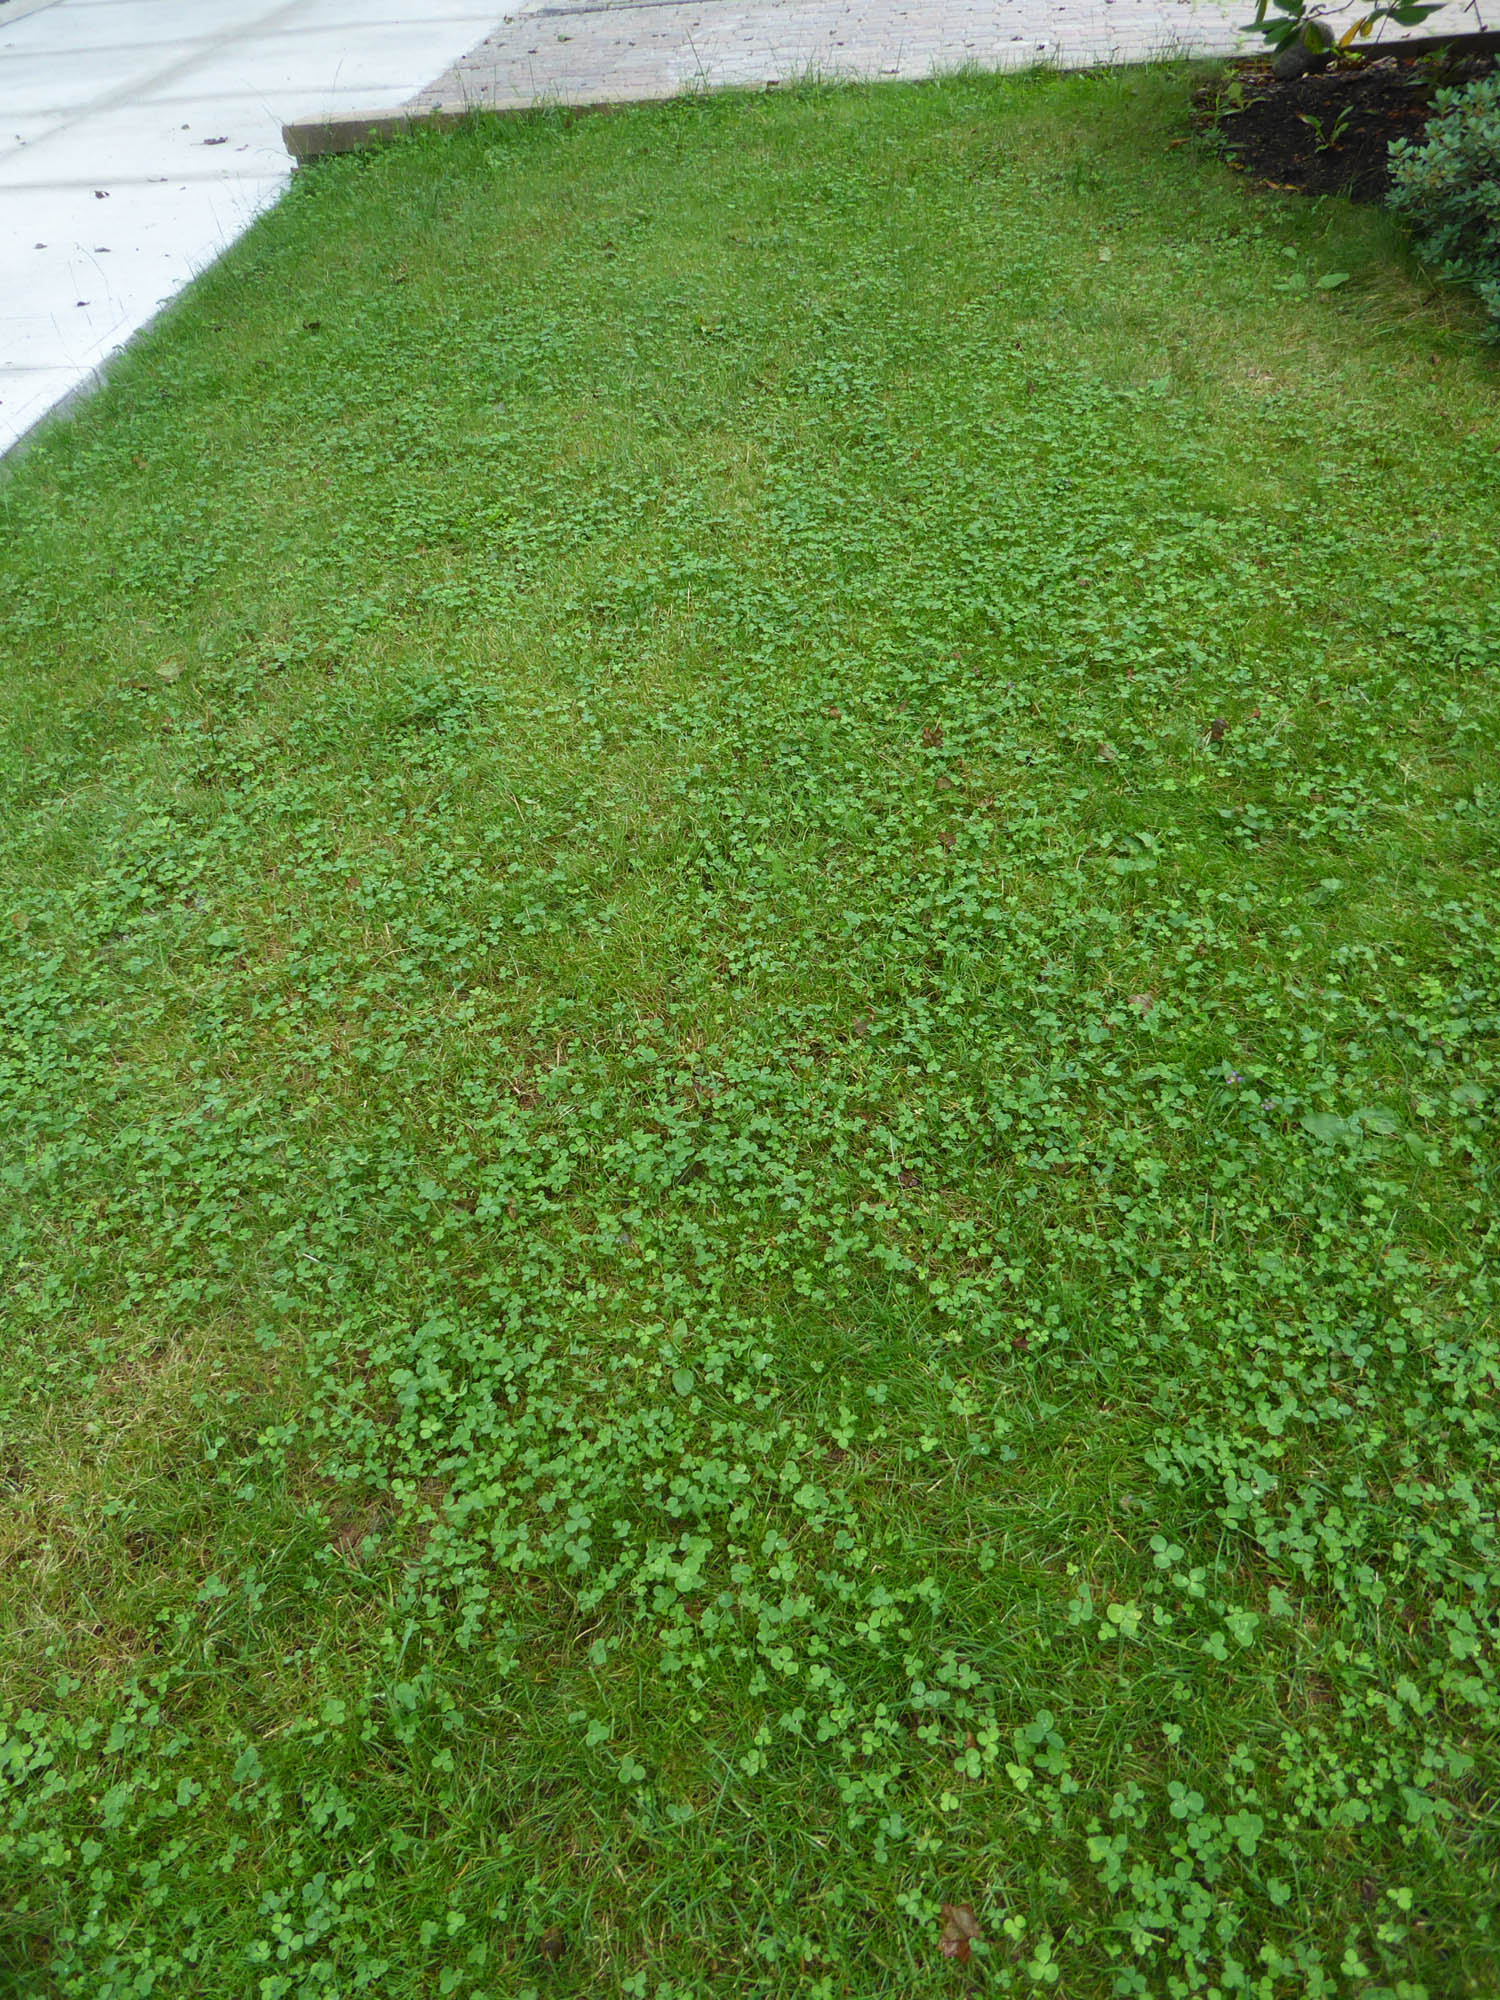 clover lawn